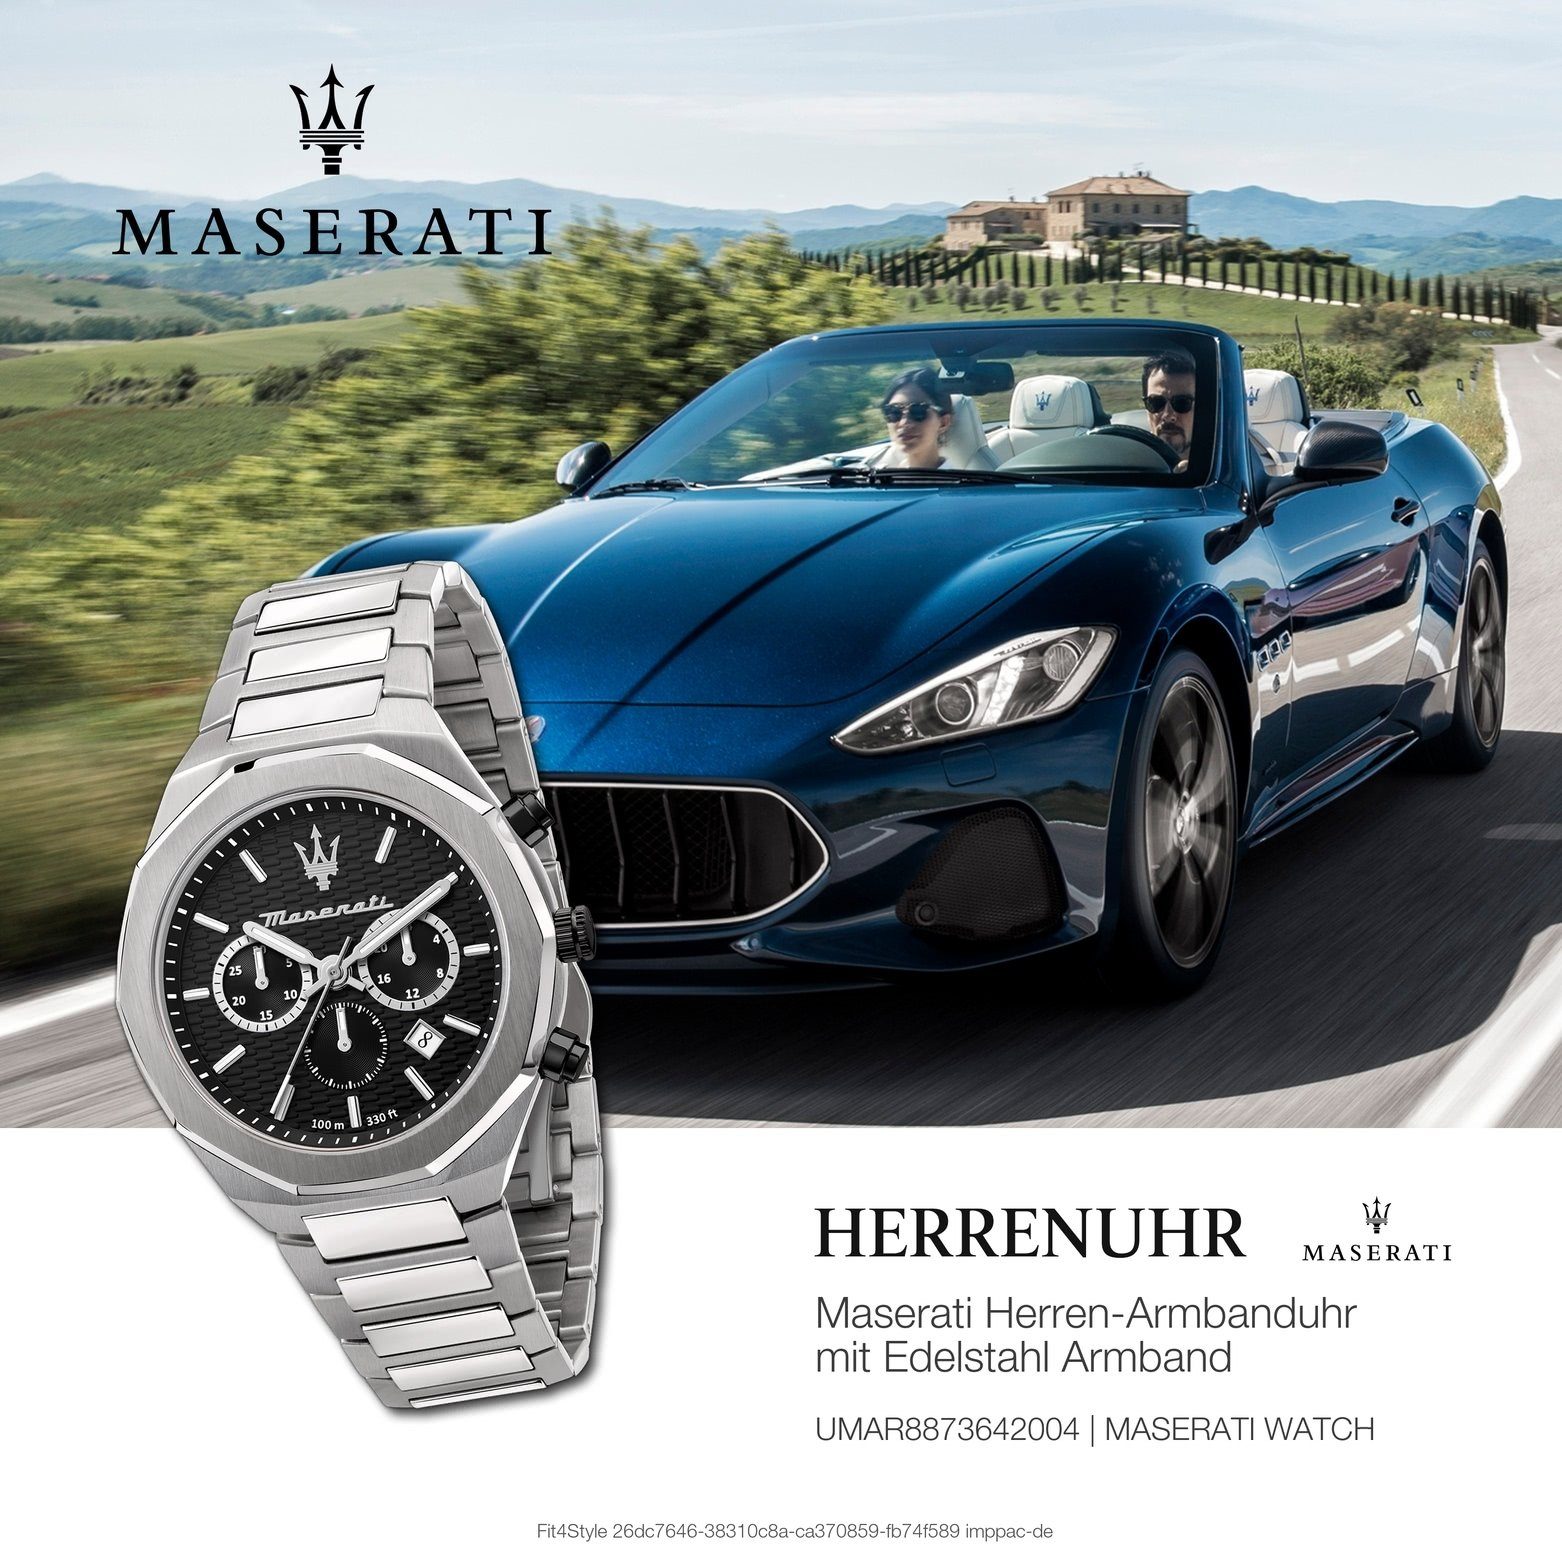 MASERATI Chronograph Maserati Herren Made-In Italy Chronograph 45mm) Edelstahlarmband, rund, groß (ca. Herrenuhr STILE